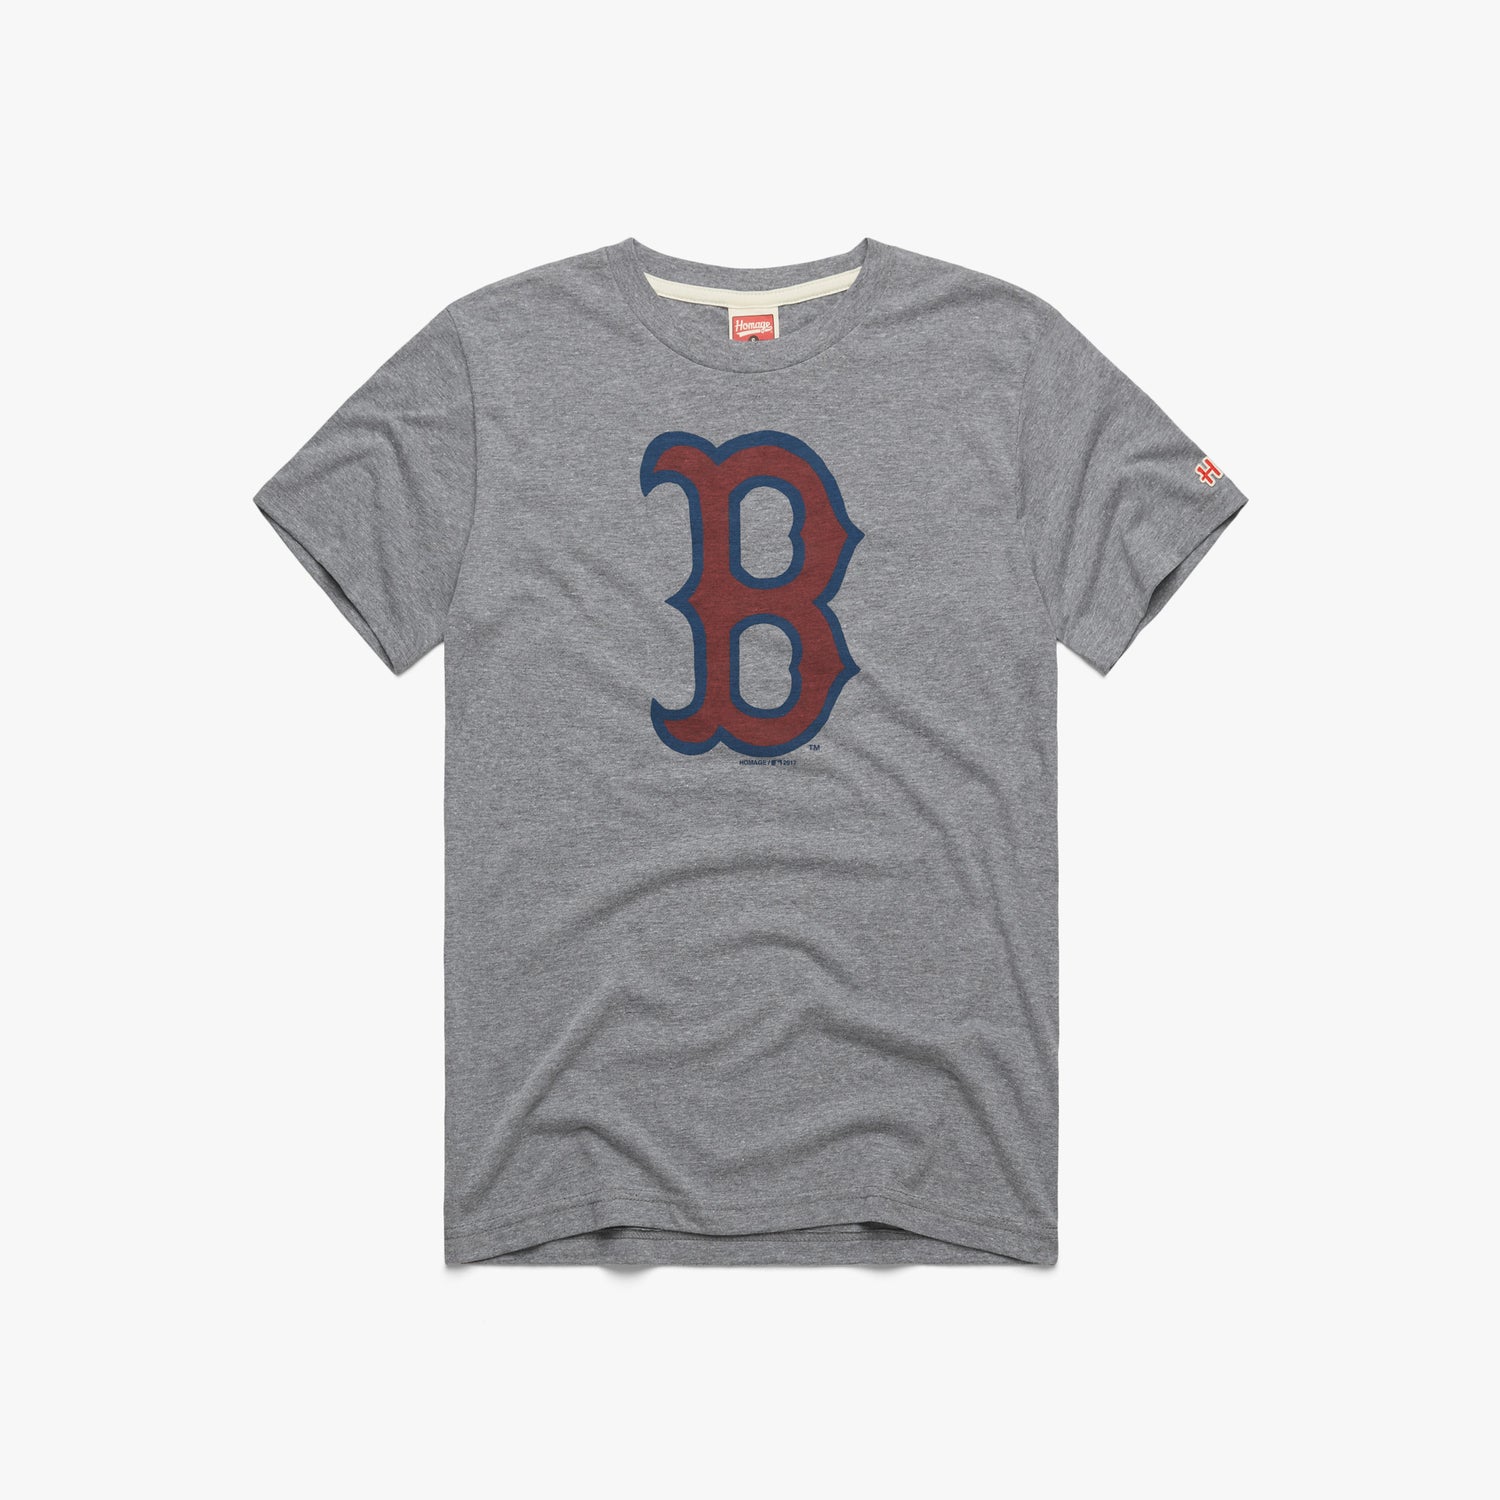 Tops, Boston Red Sox Crop Top